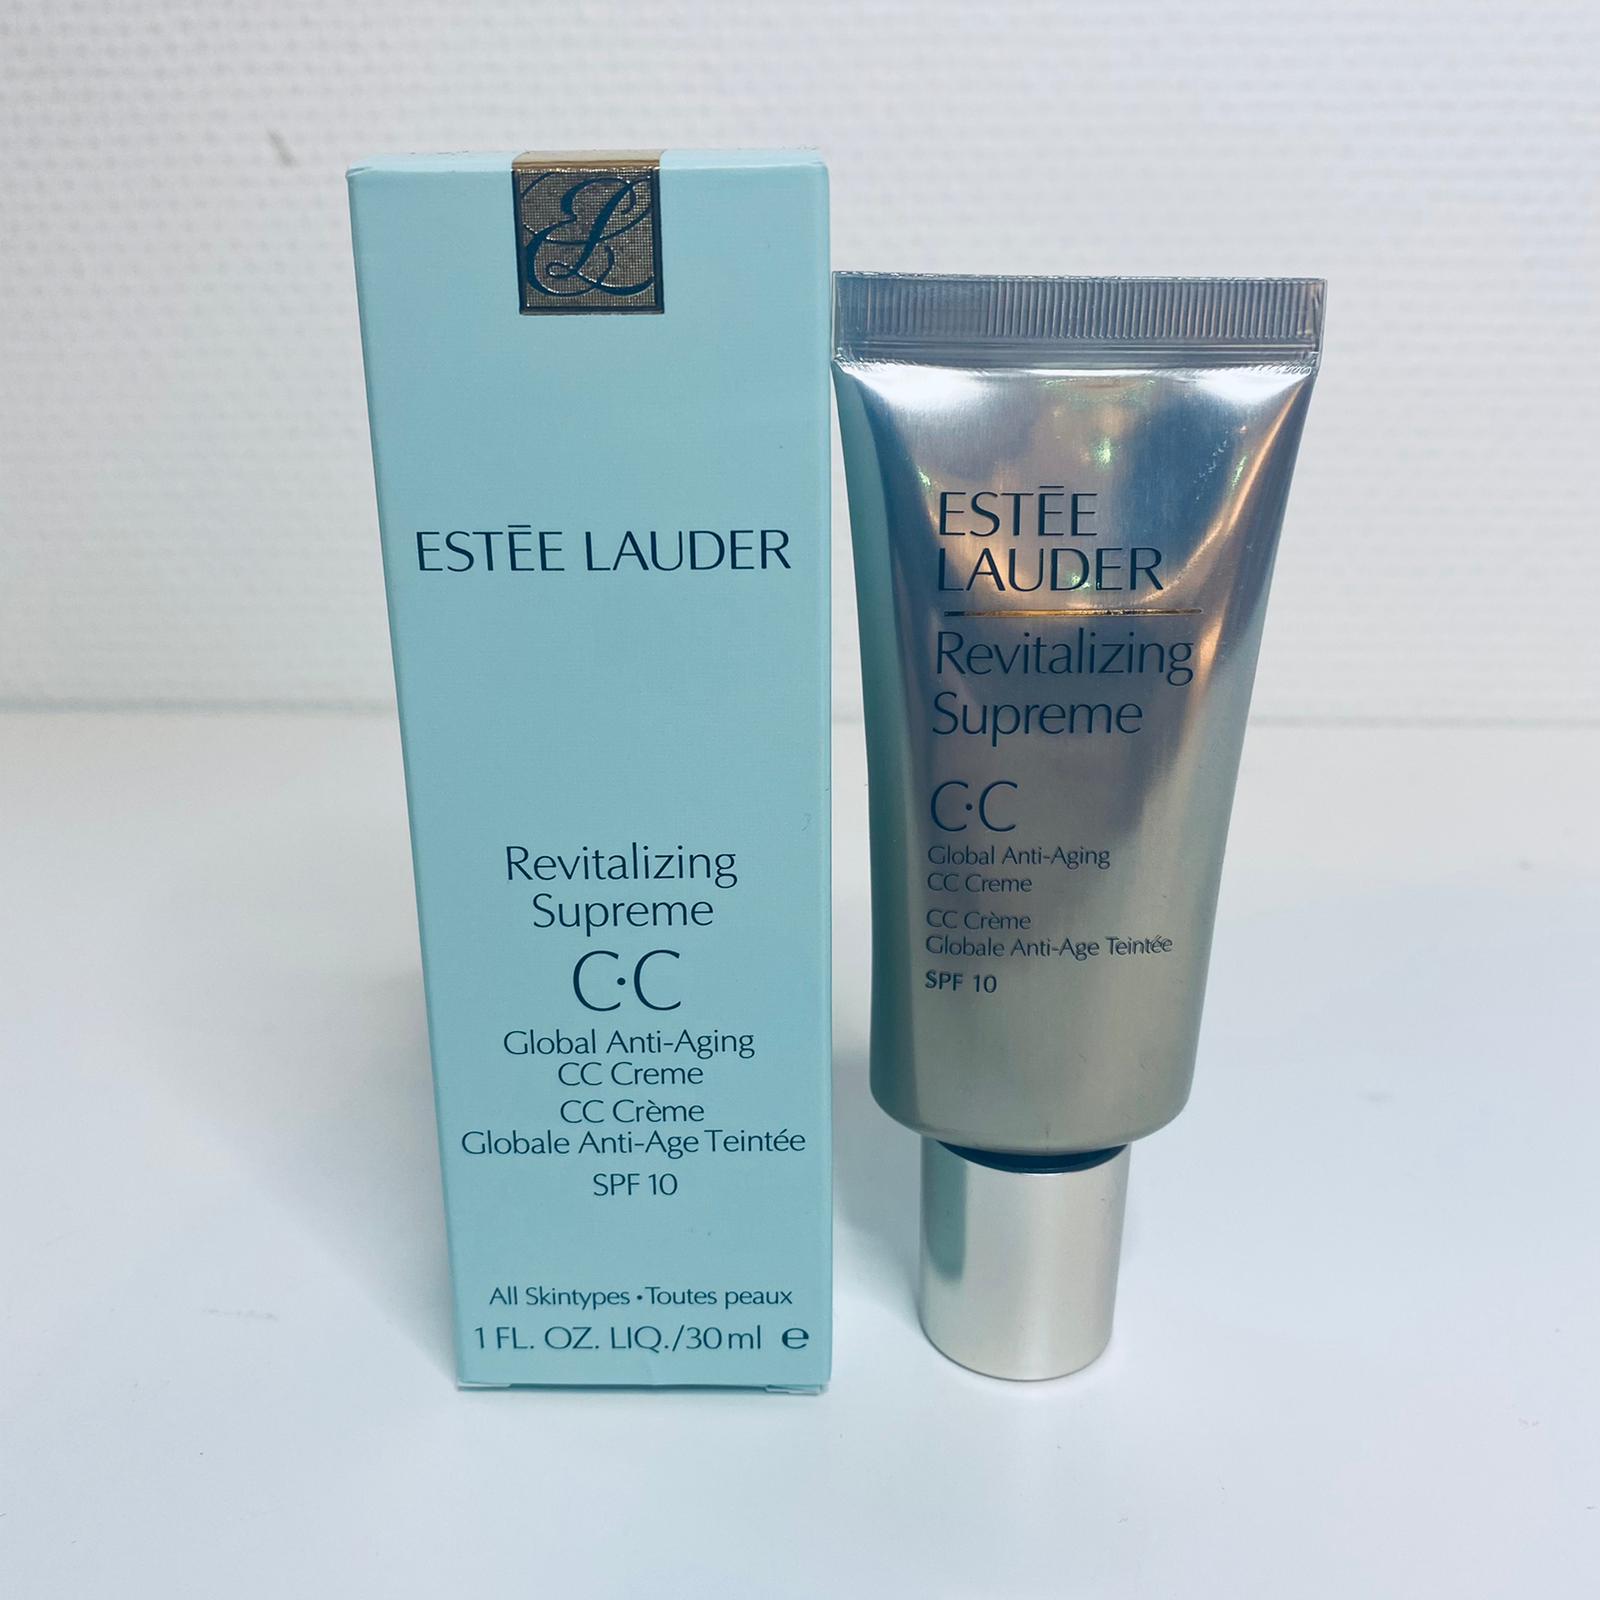 Estee Lauder revitalizing supreme CC. All skintypes 30 ml